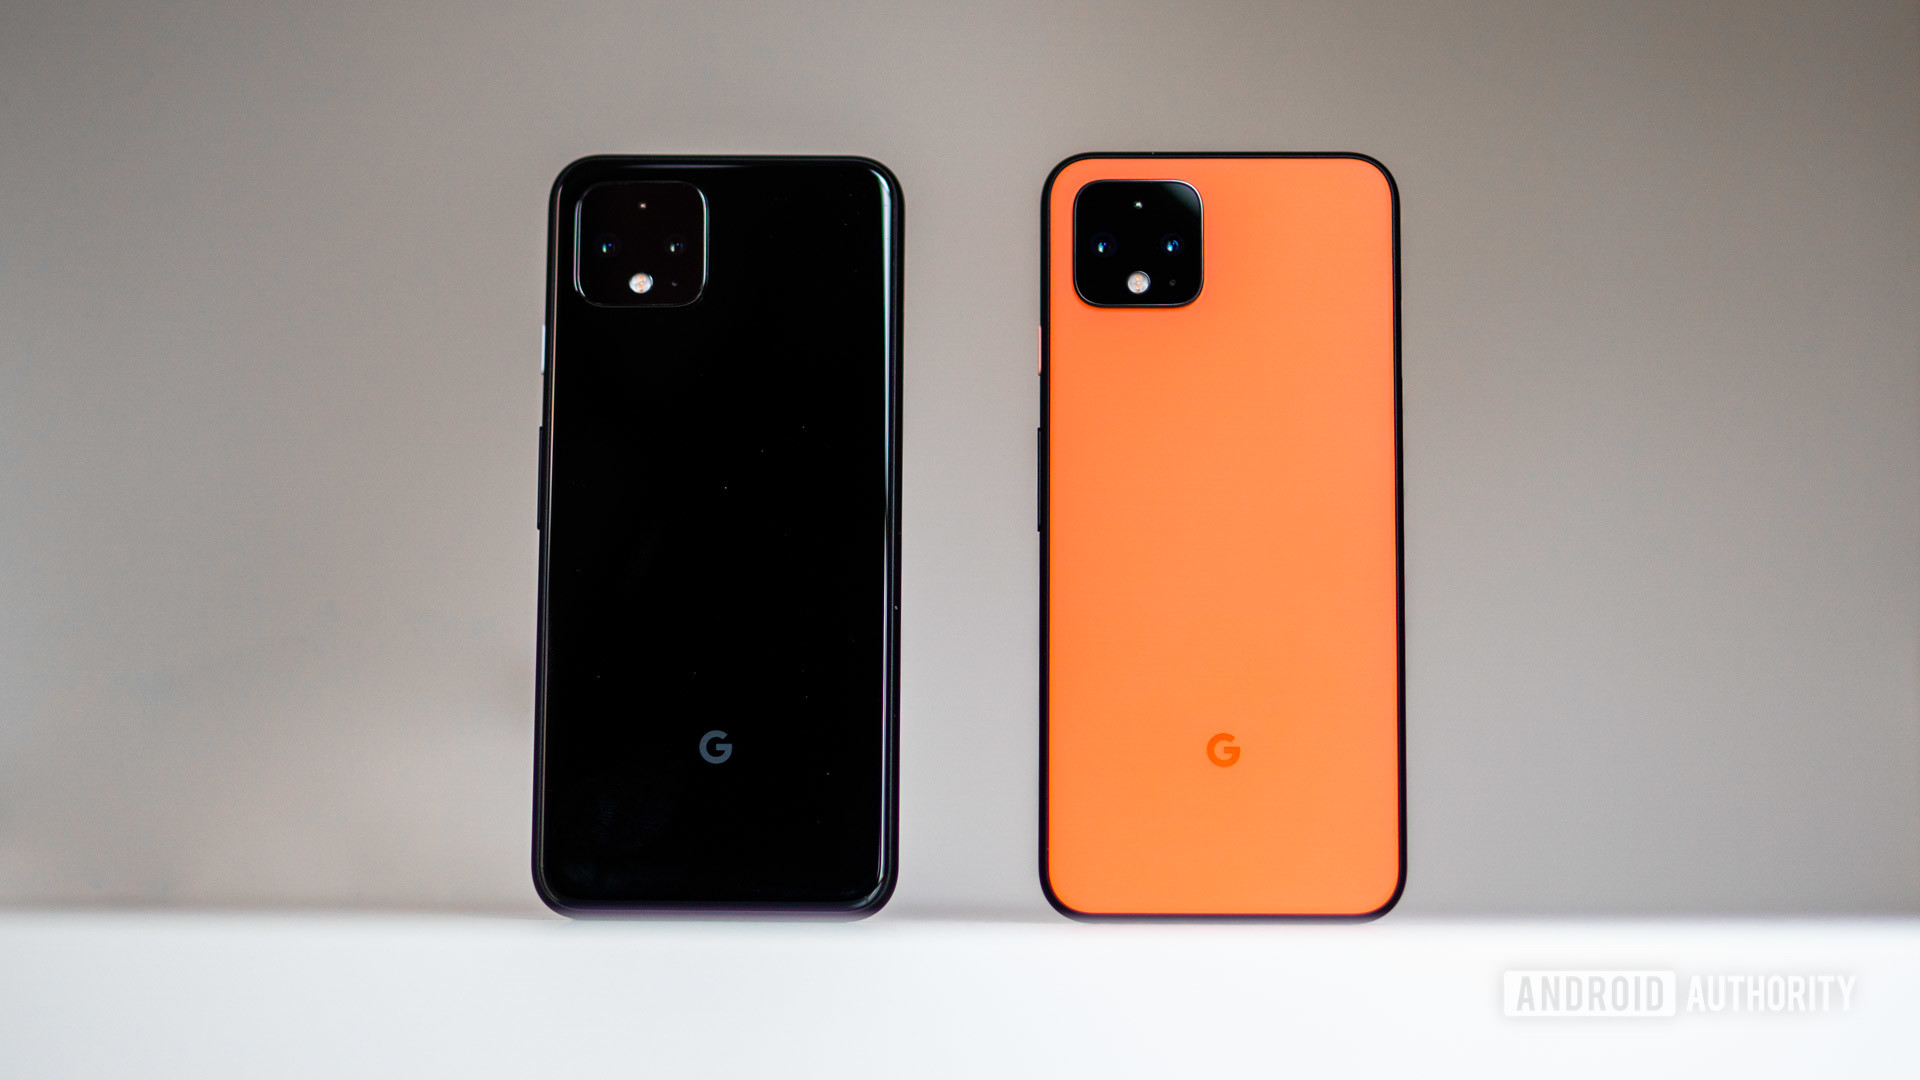 Google Pixel 4 in just black and oh so orange